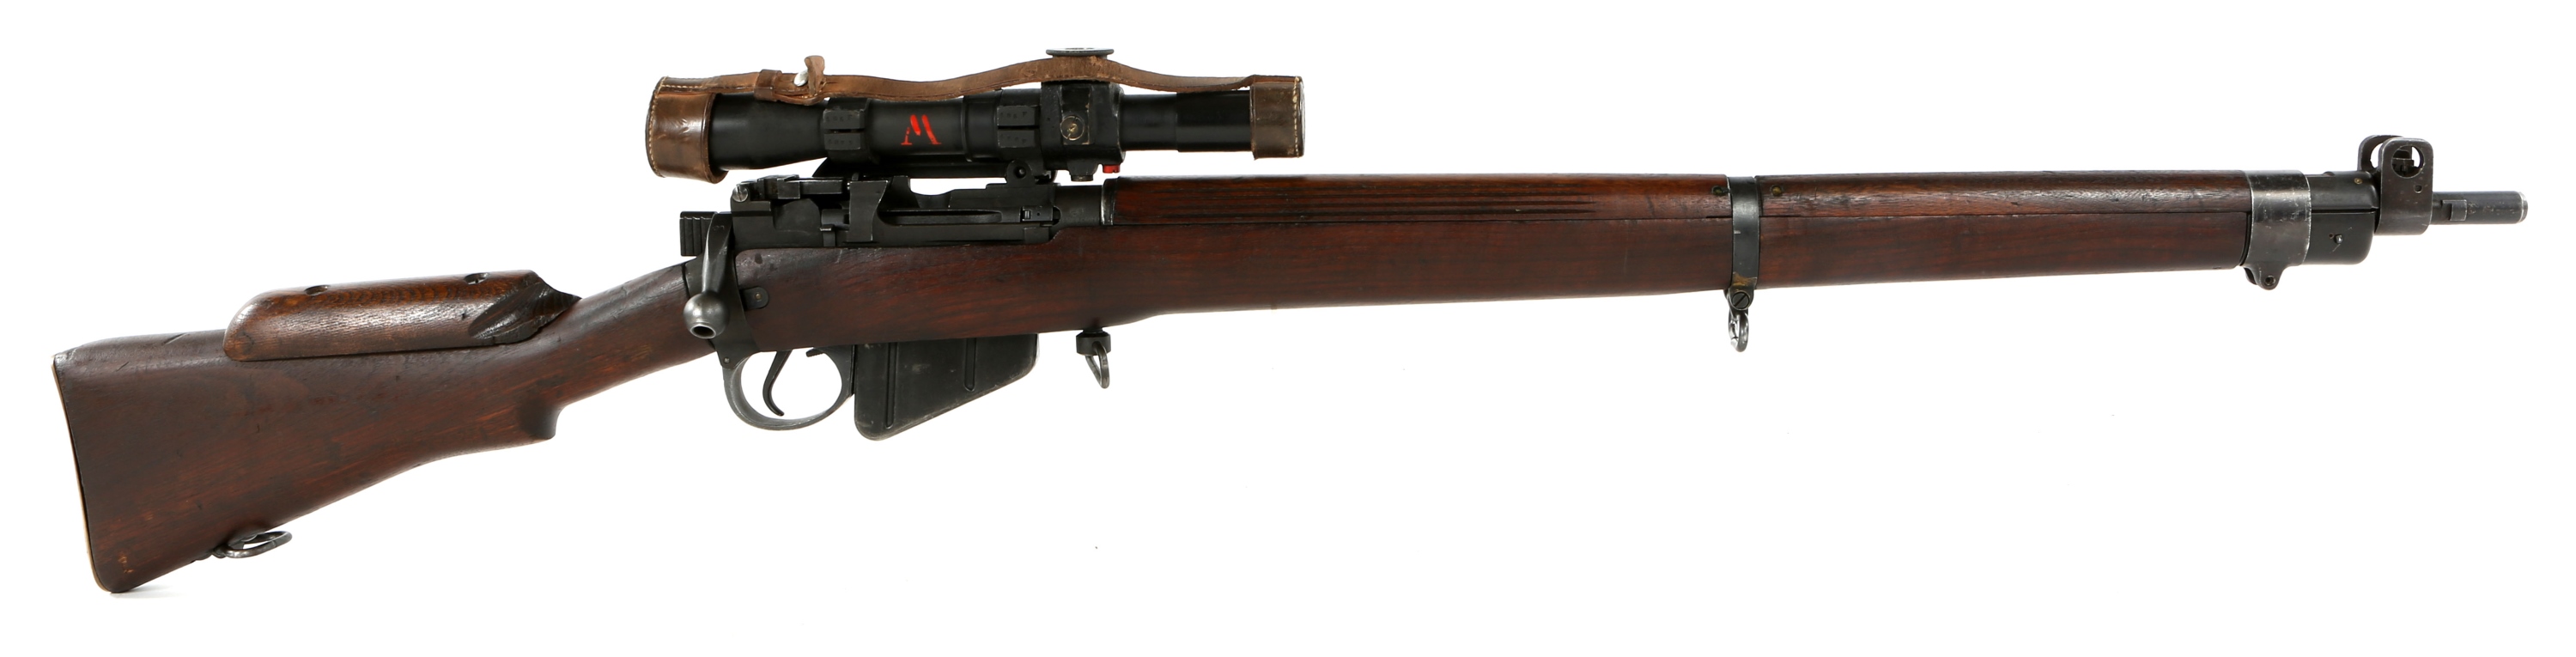 Long Branch Lee Enfield Sniper Rifles 